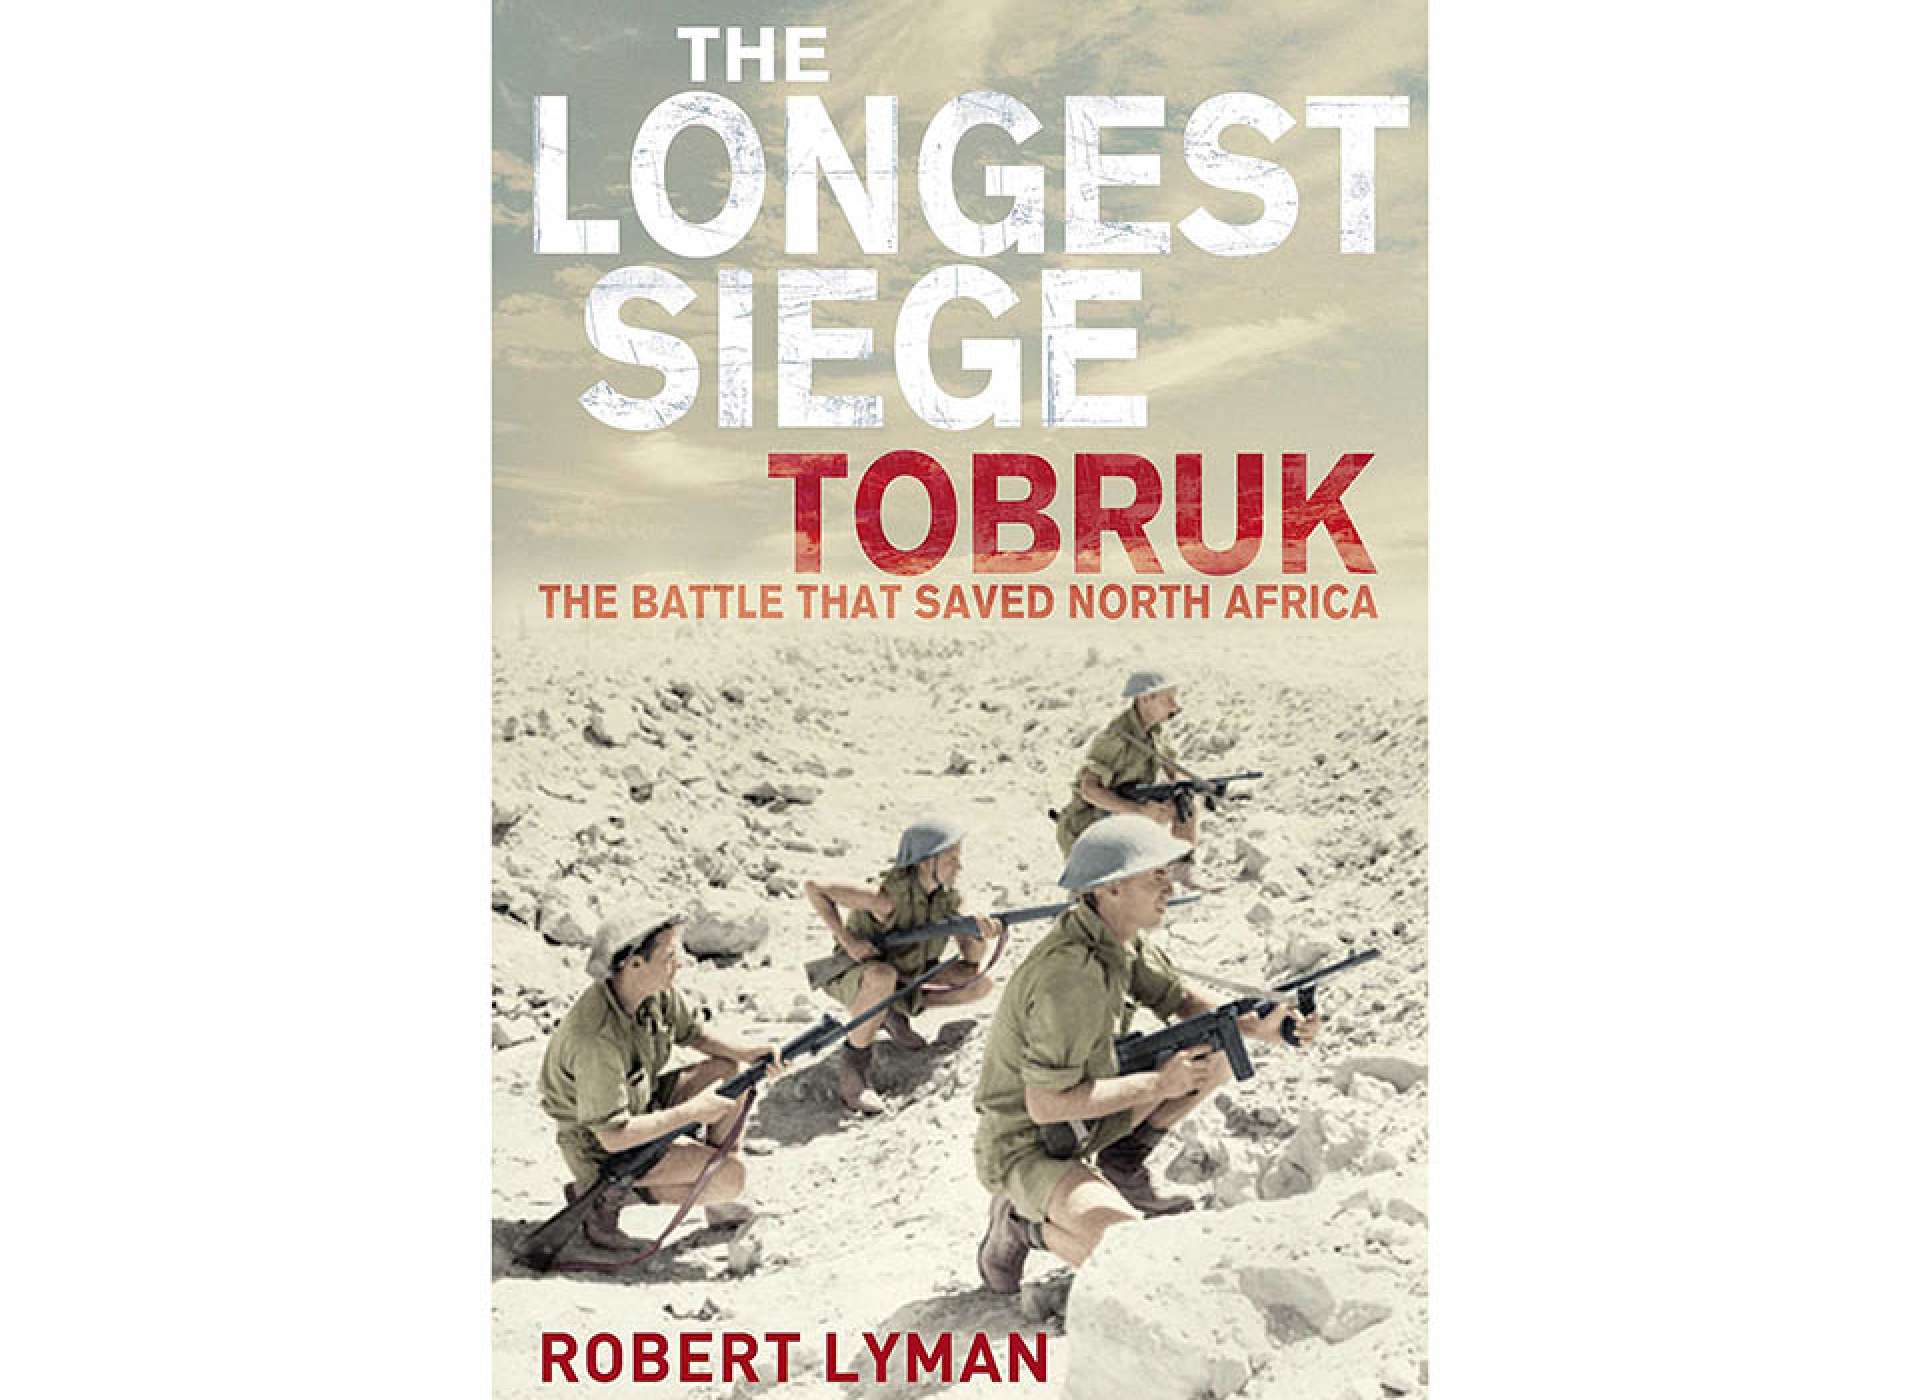 The Longest Siege. Courtesy of Amazon.com